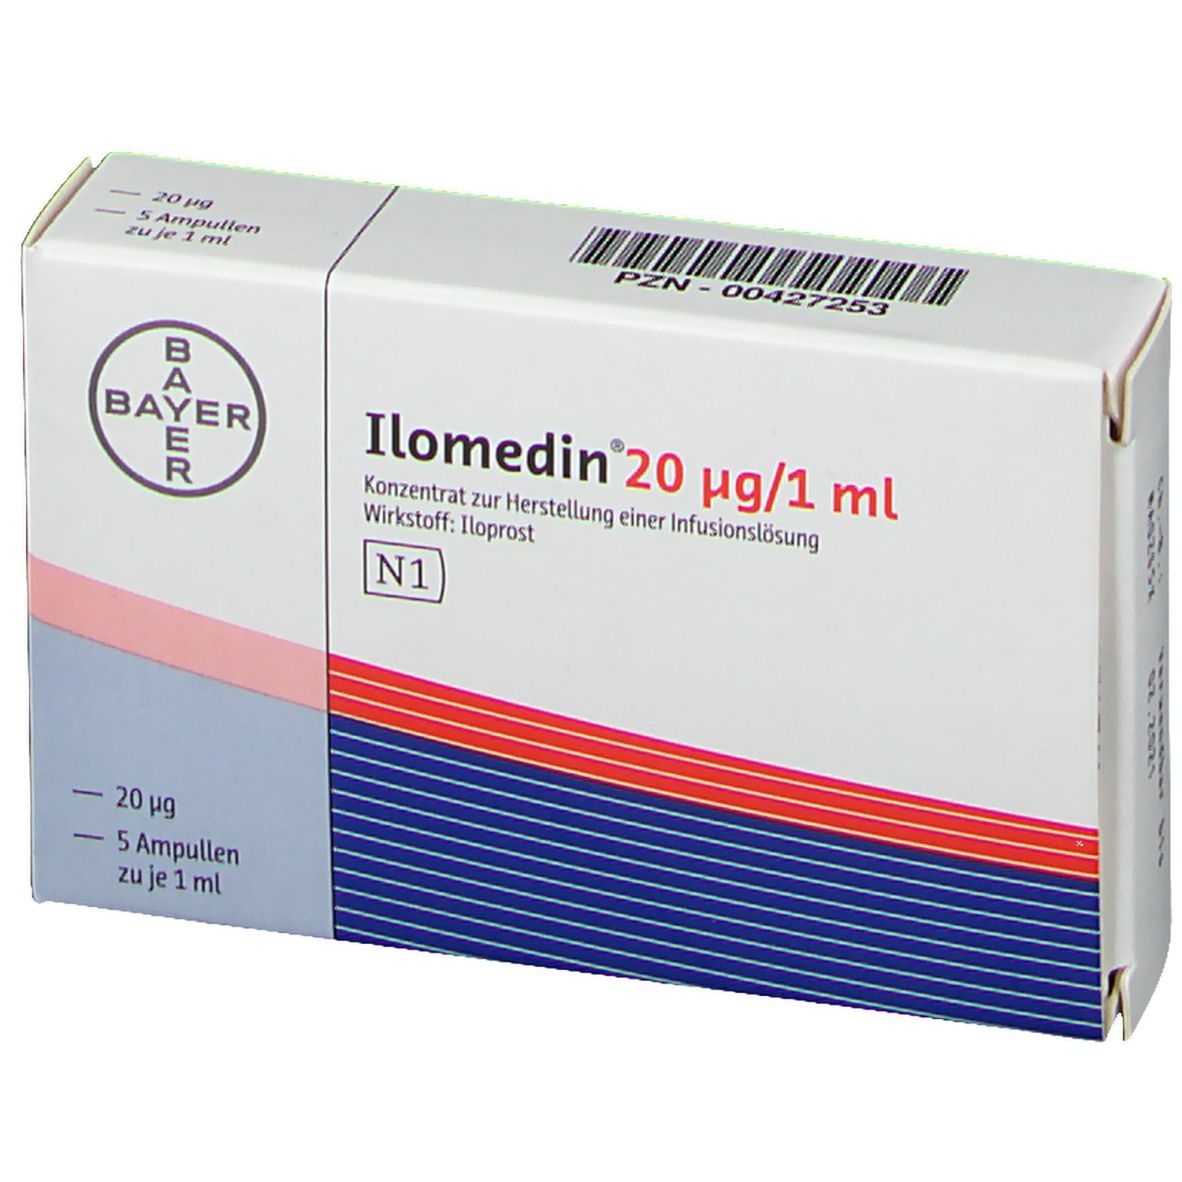 Ilomedin® 20 ug/1 ml